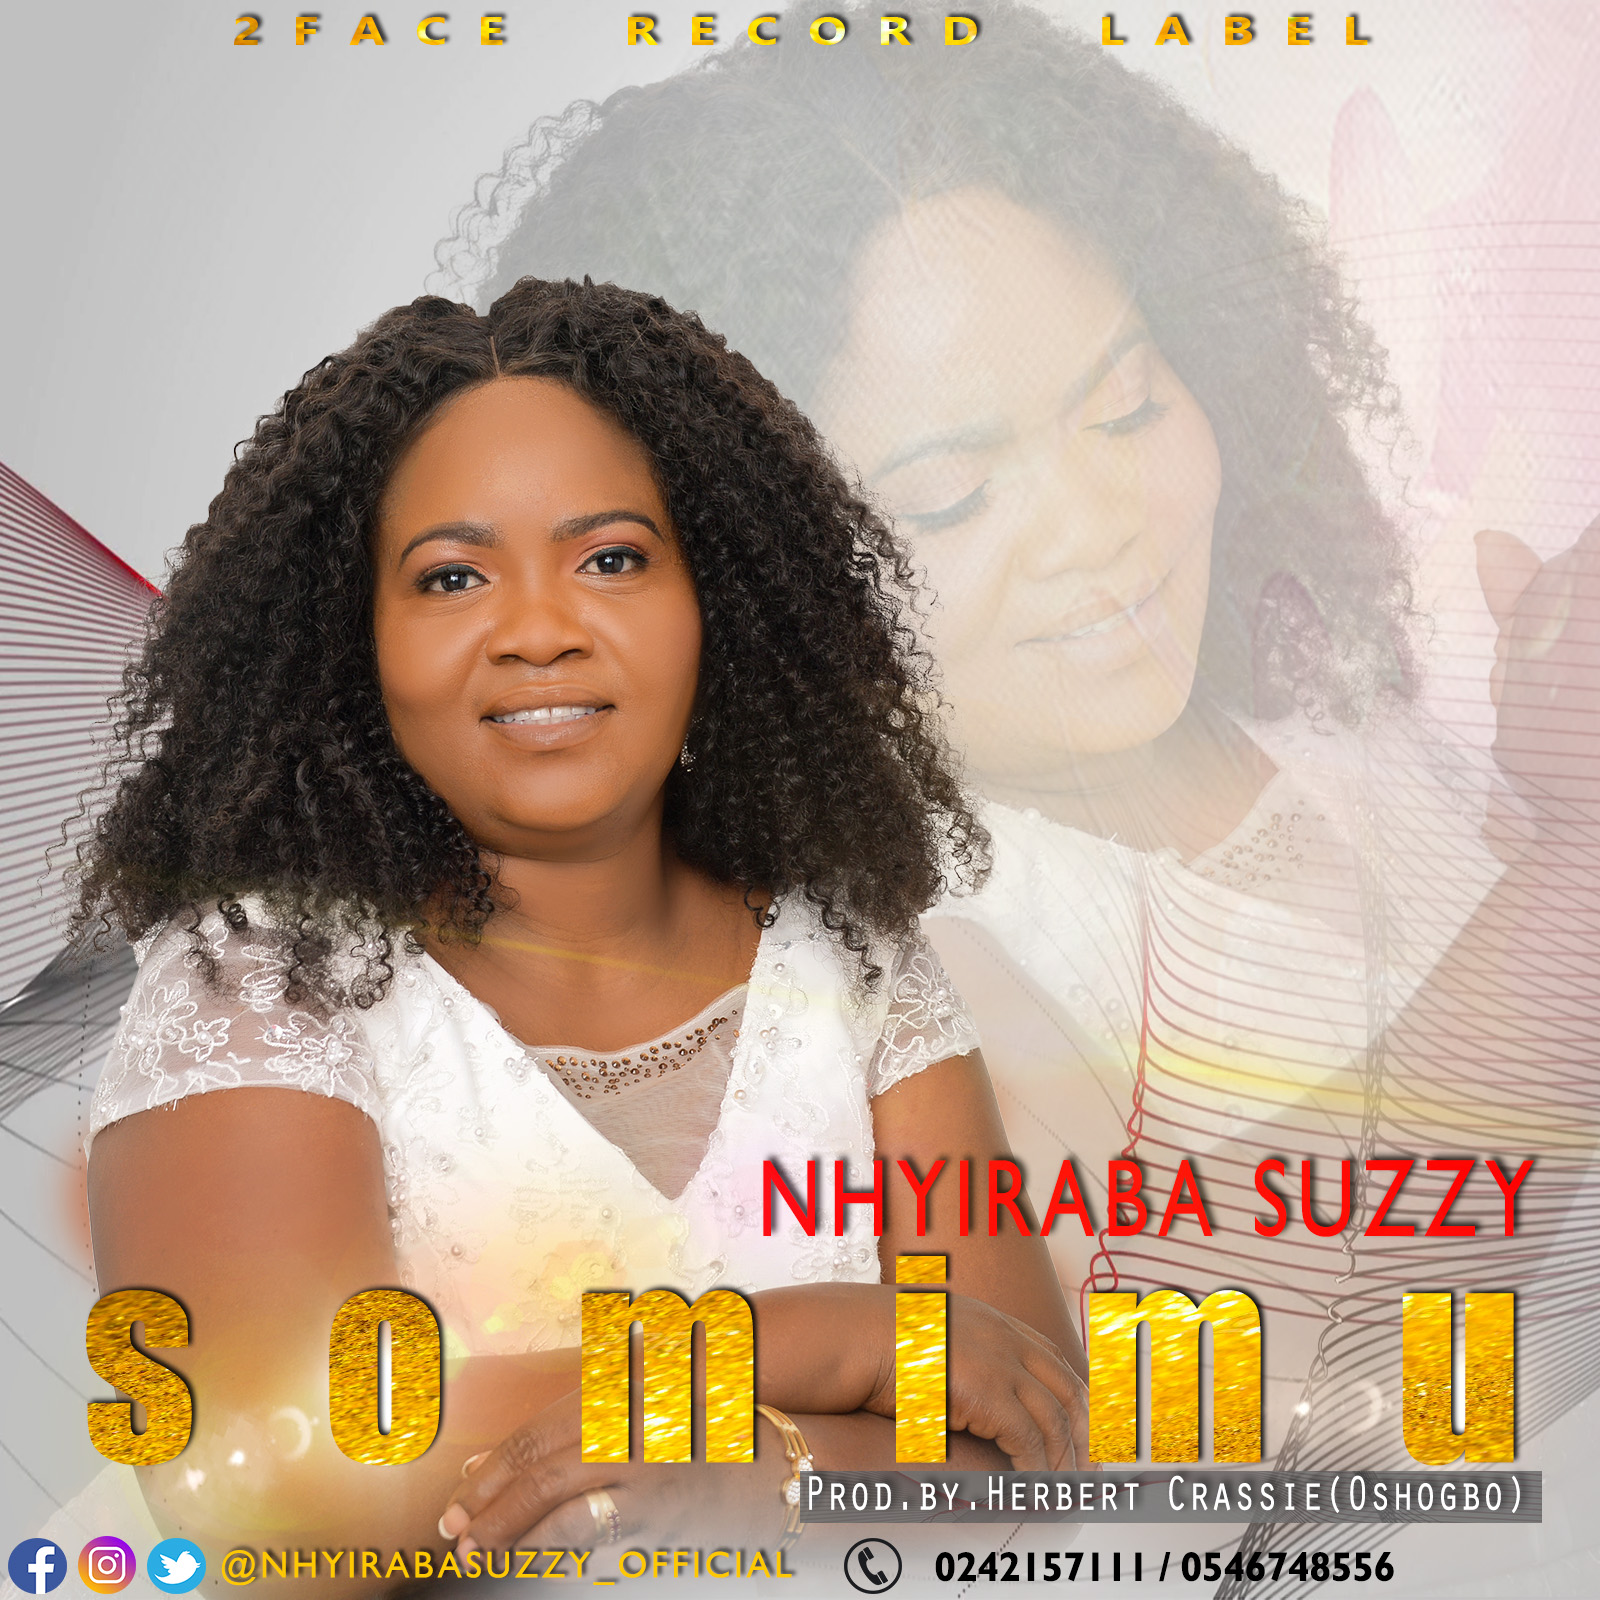 Nhyiraba Suzzy - Somimu (Prod by Herbert Crassie)